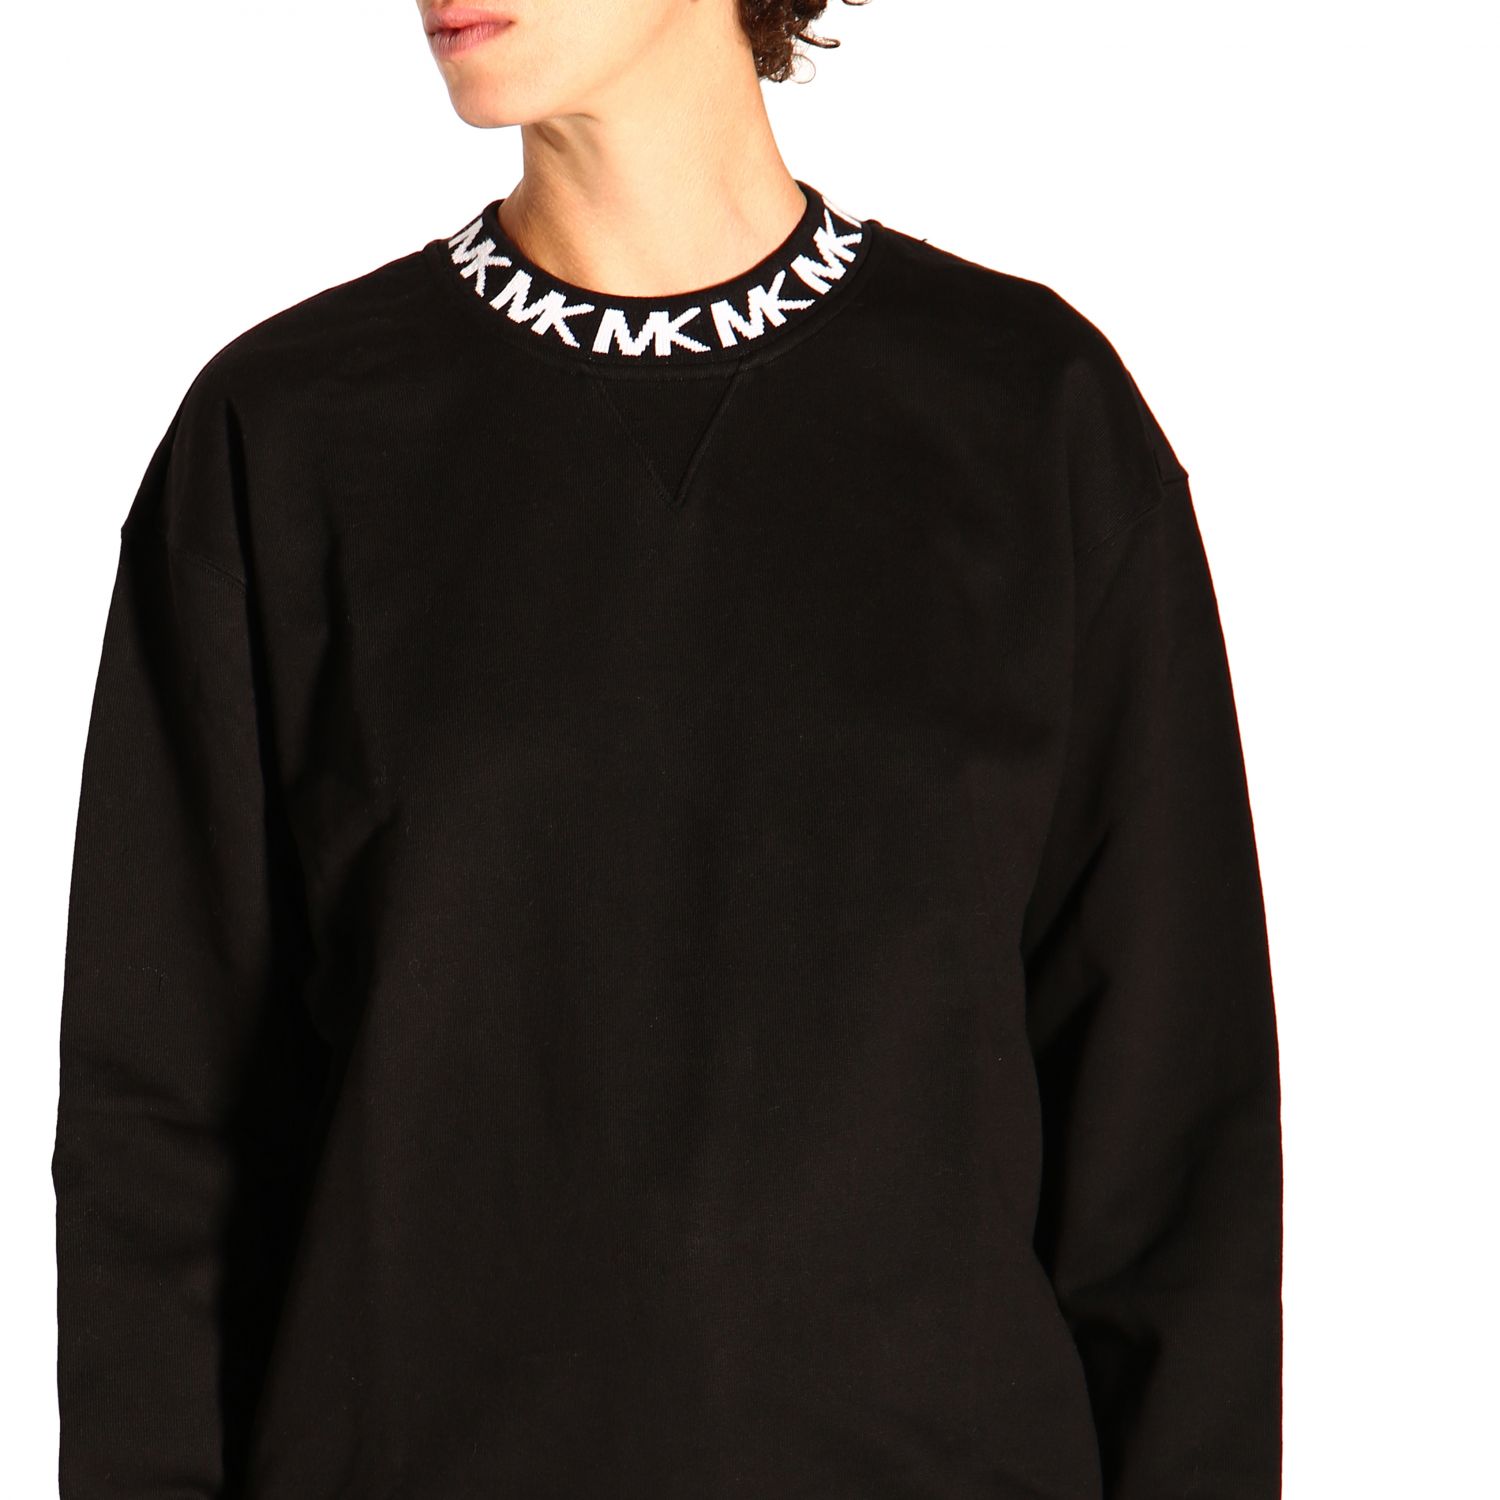 michael kors black sweatshirt